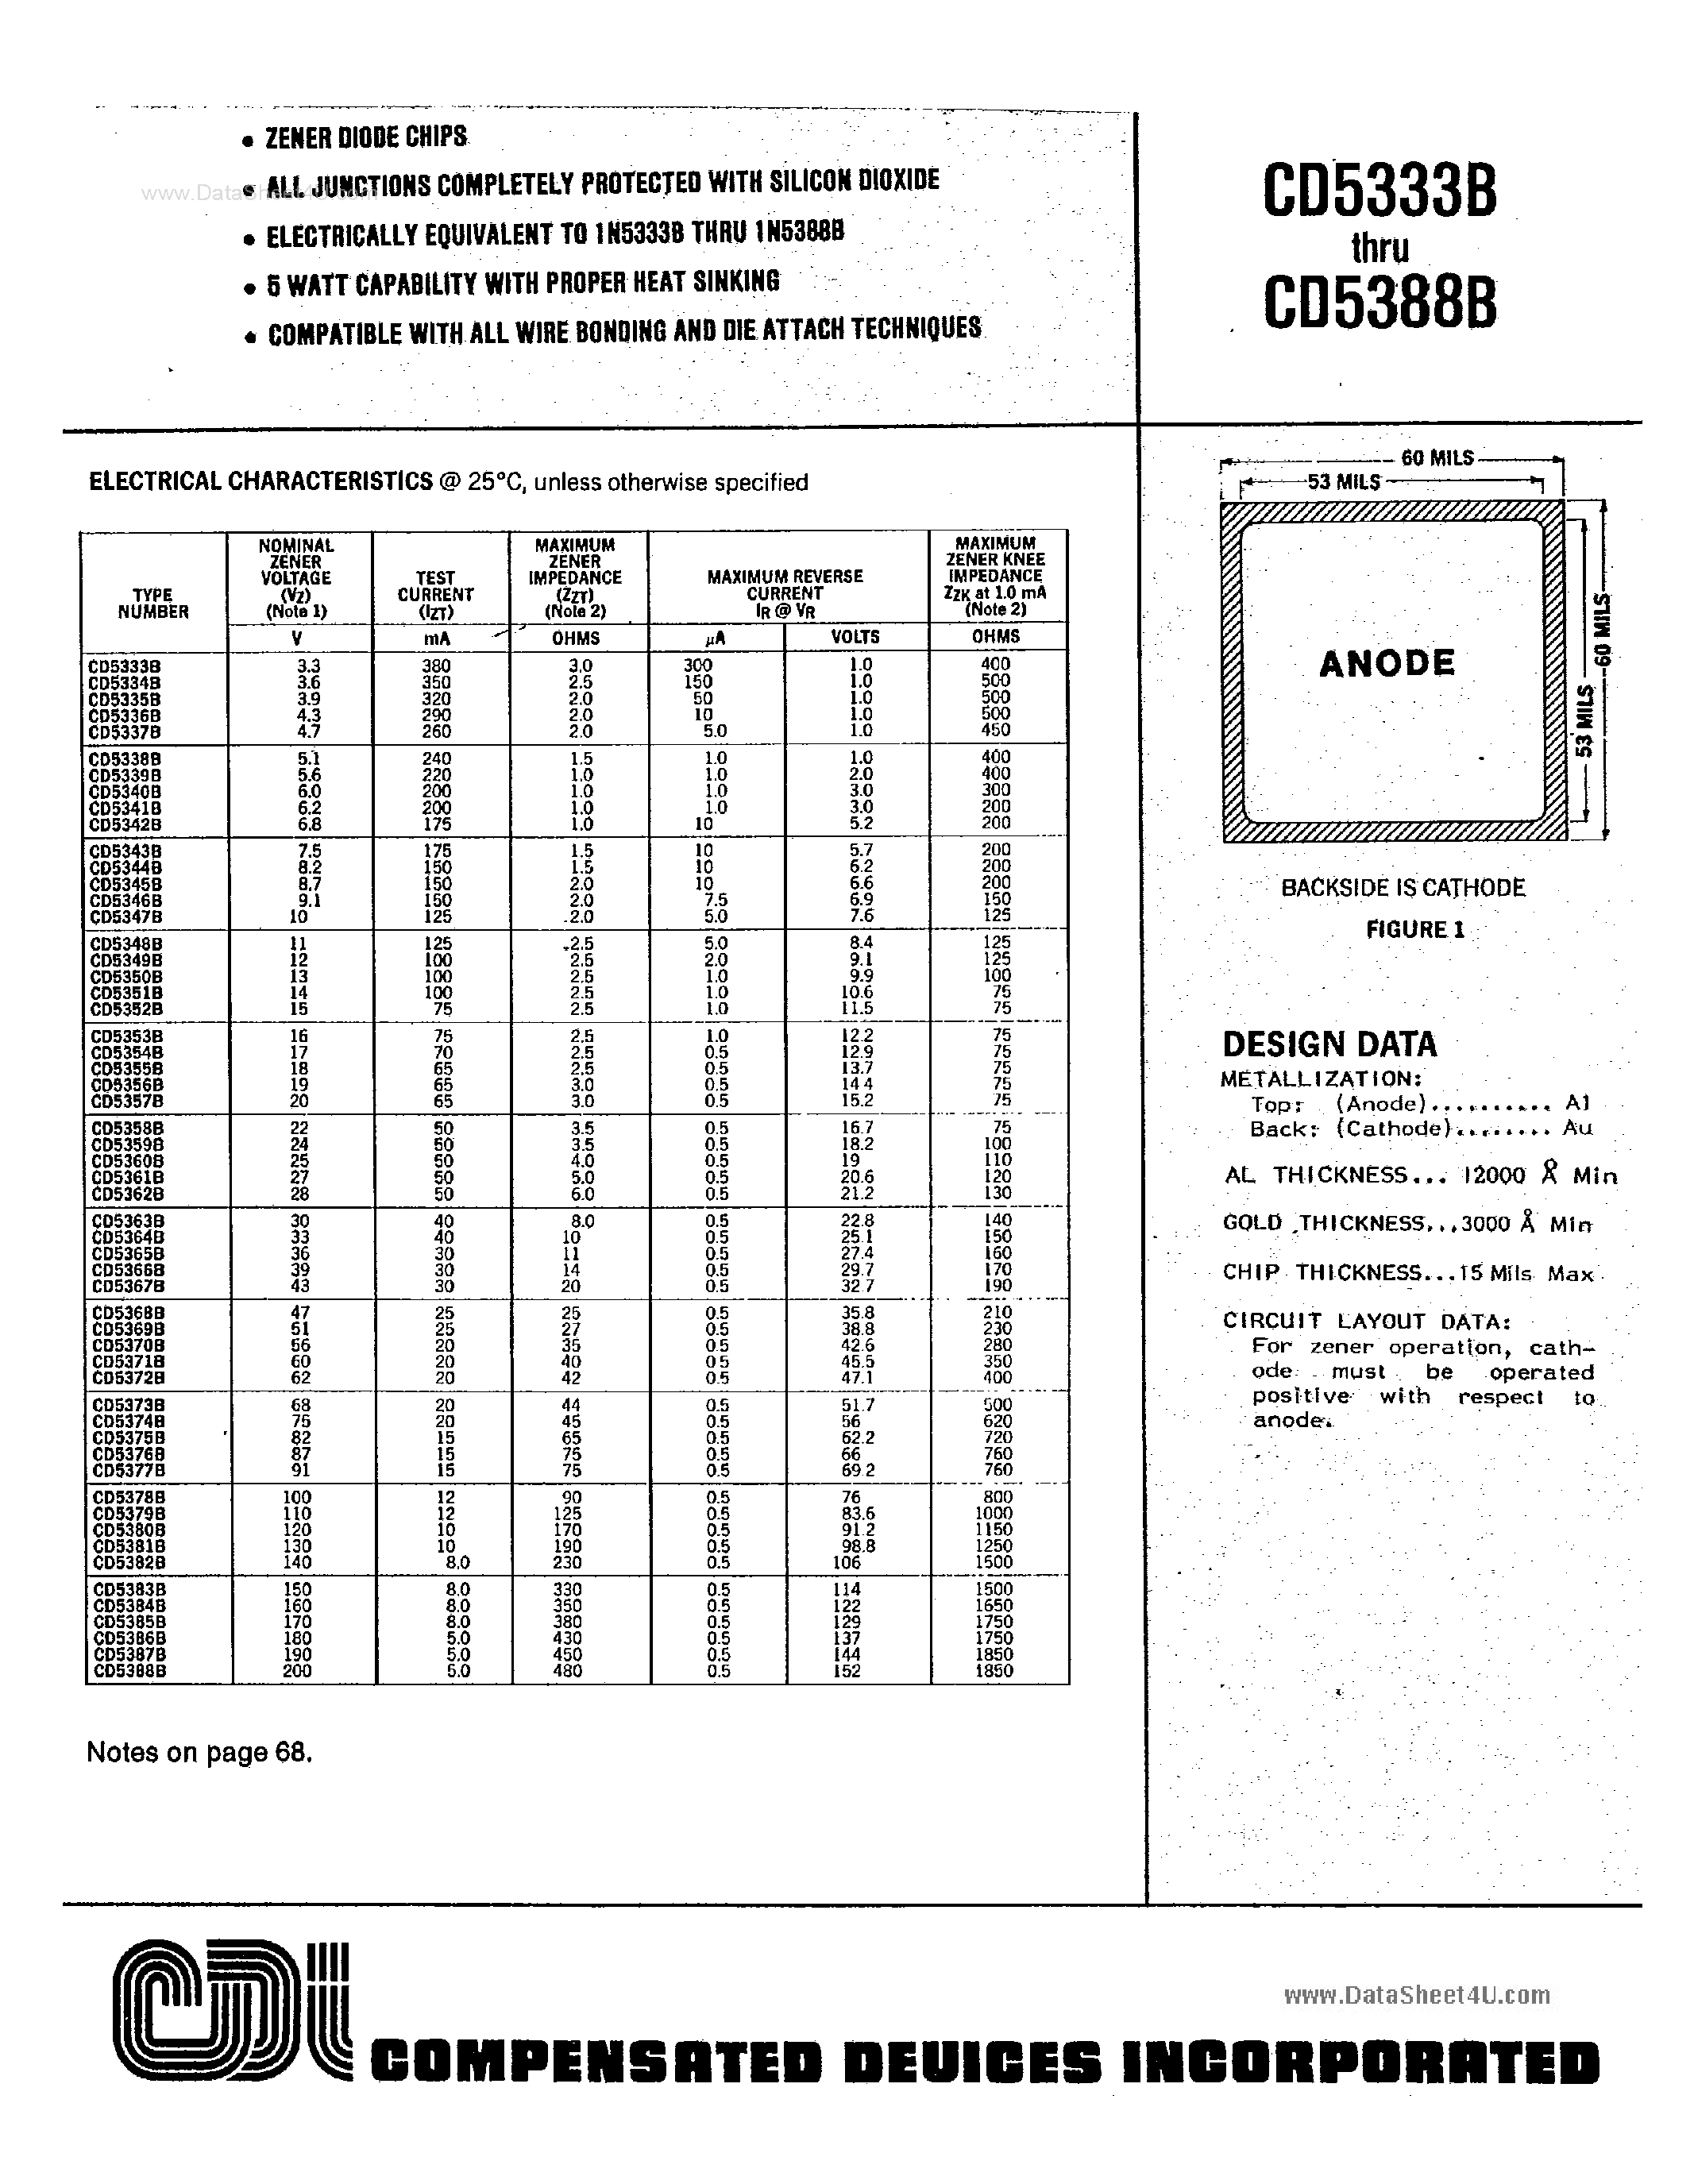 Datasheet CD533xB - (CD5333B - CD5388B) Zener Diode page 1